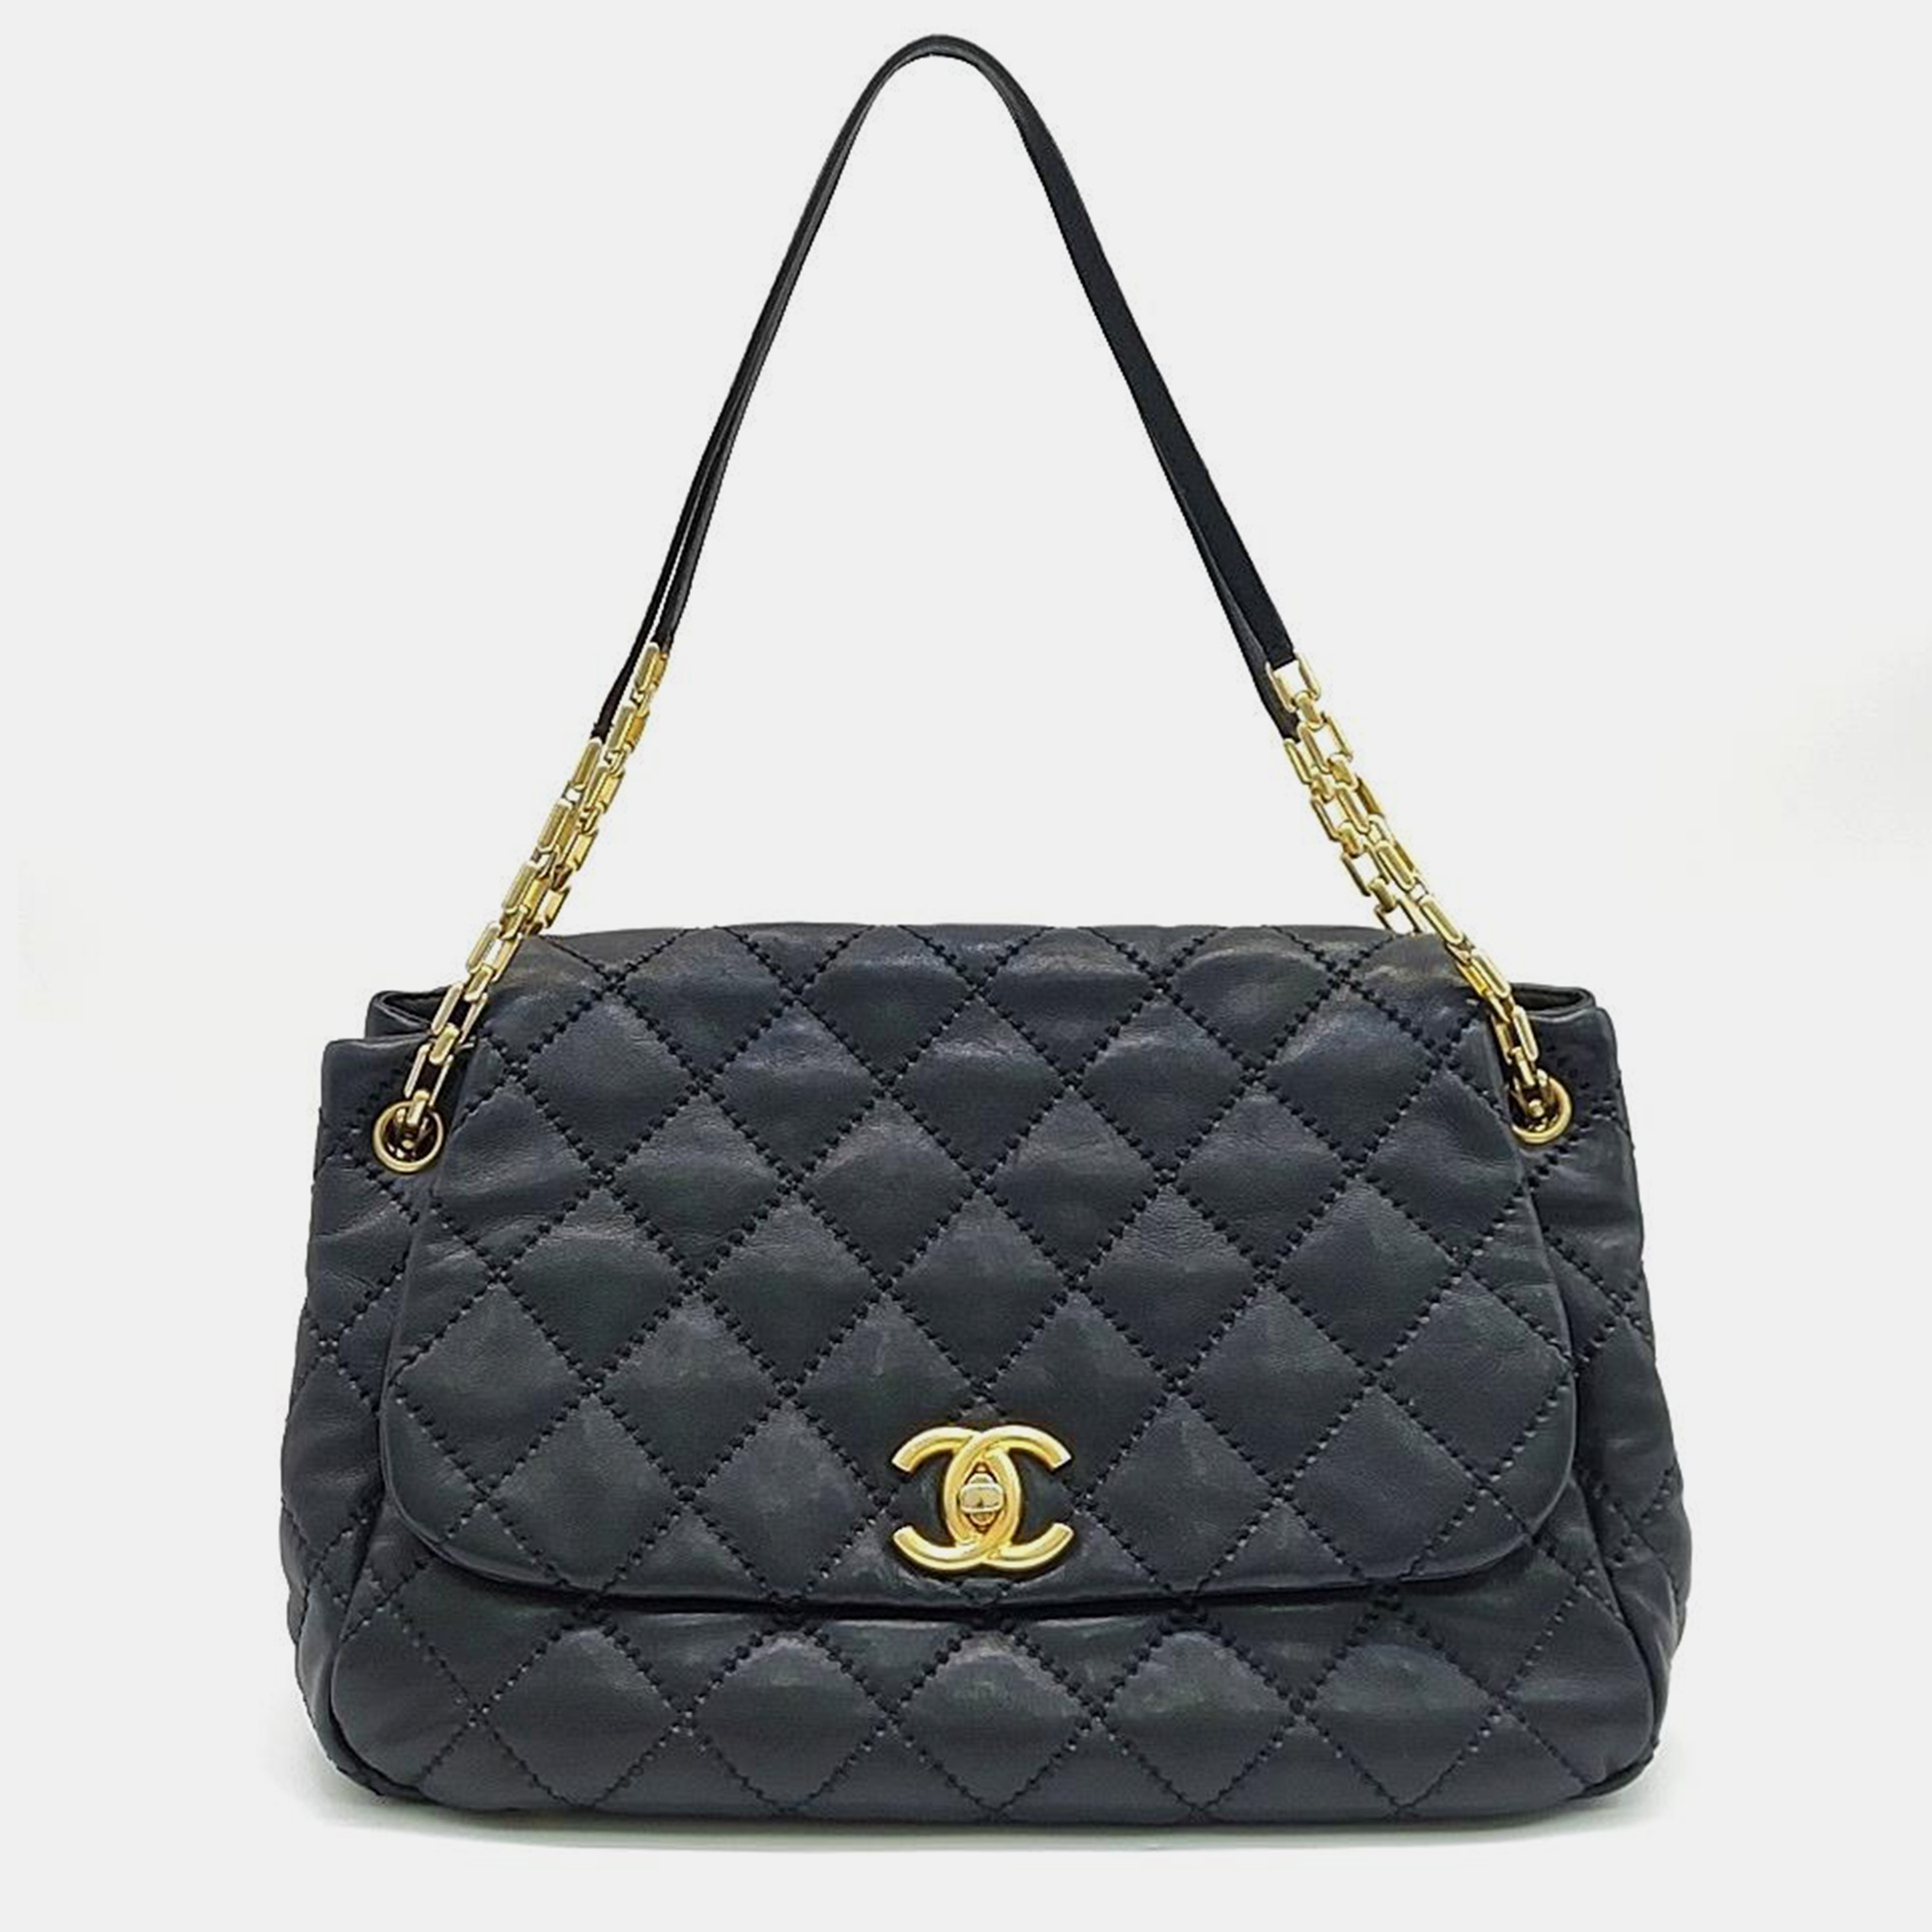 

Chanel Black Leather Wild Stitch Chain Shoulder Bag